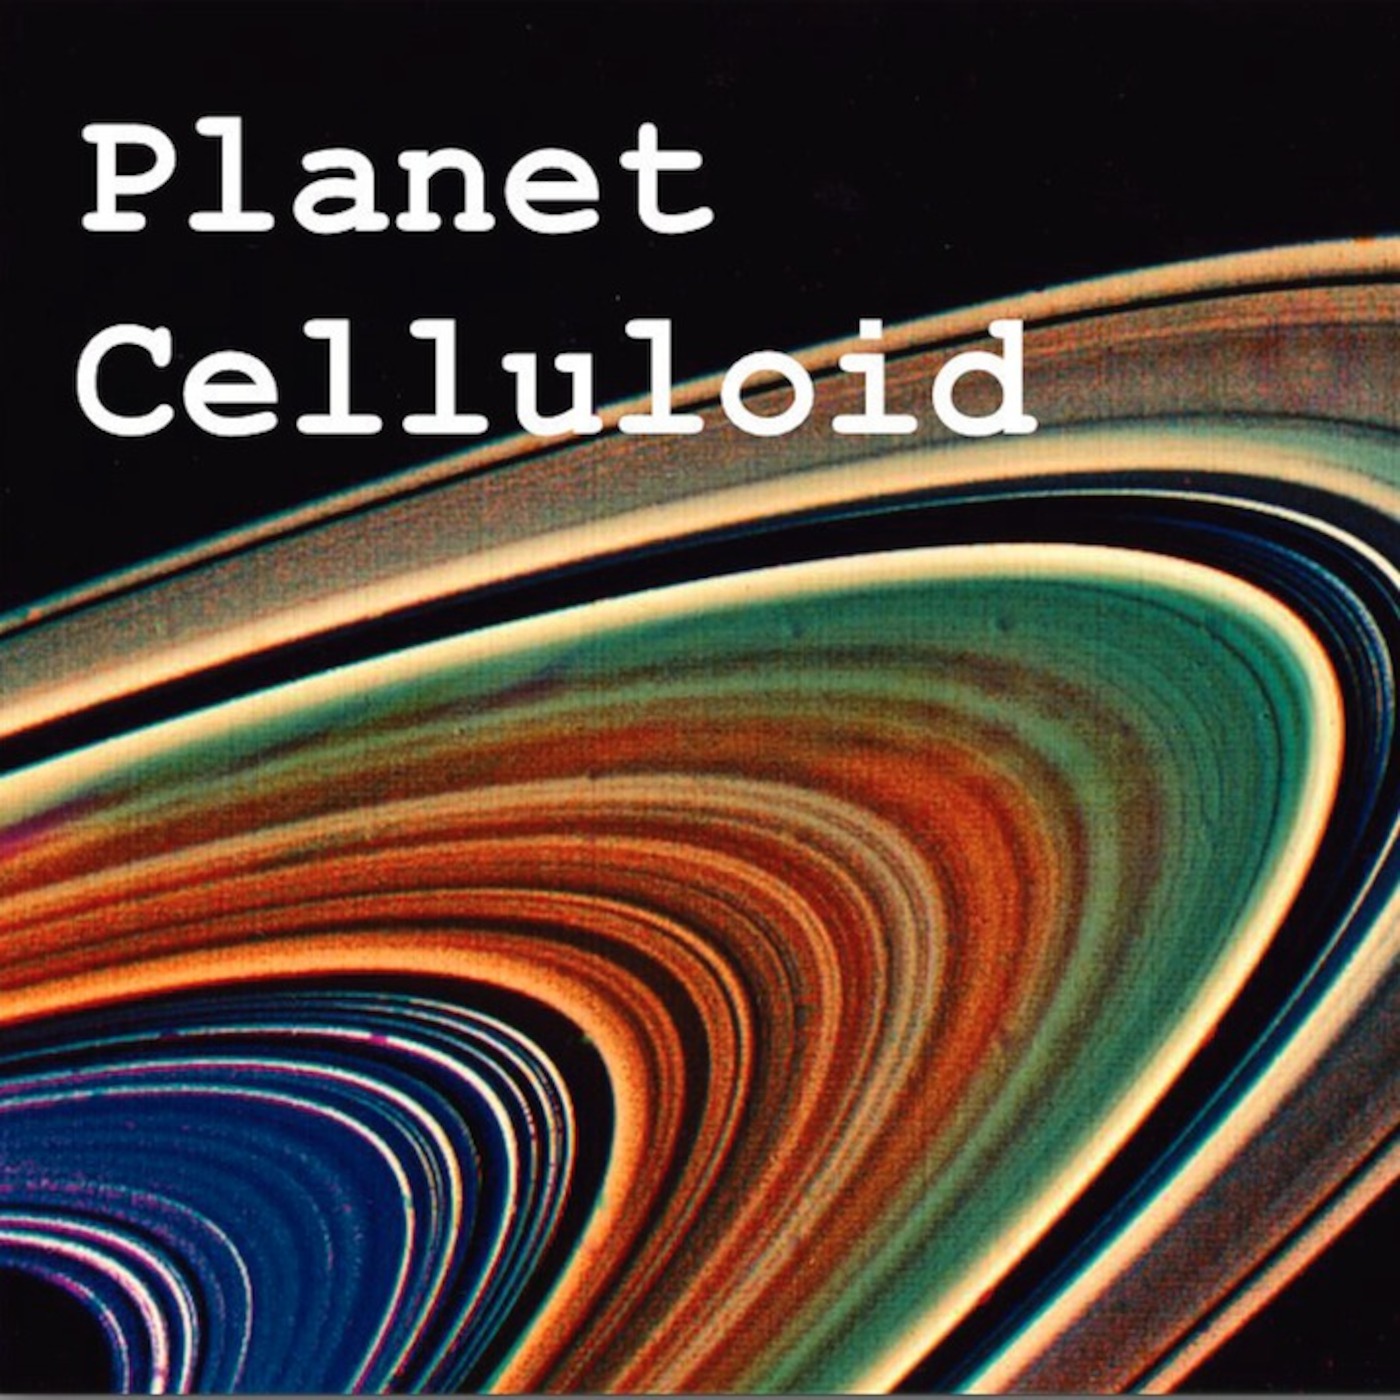 Planet Celluloid